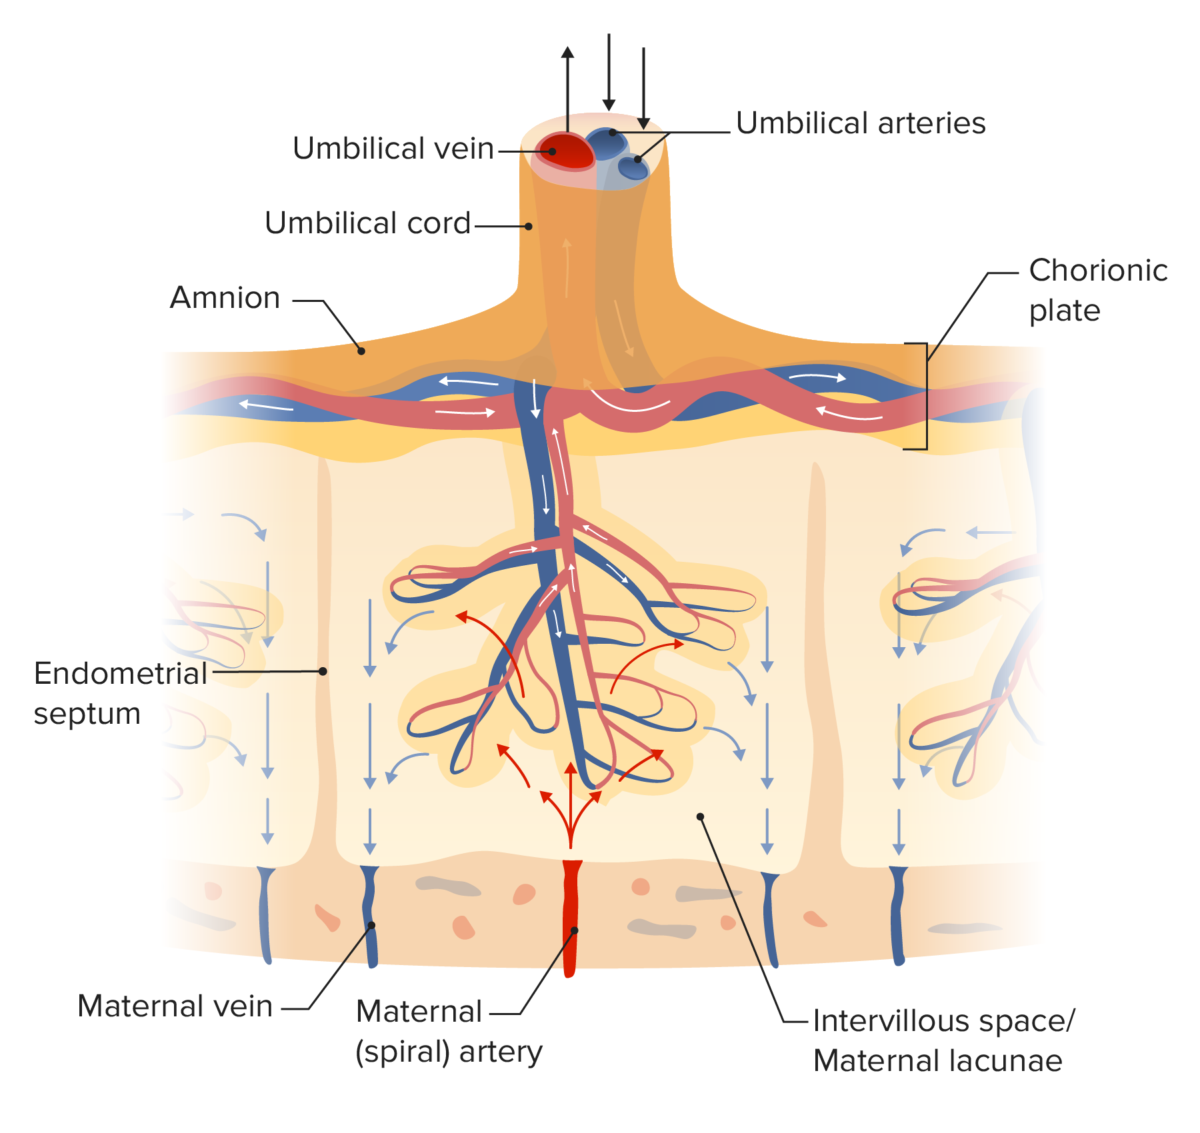 Placental circulation